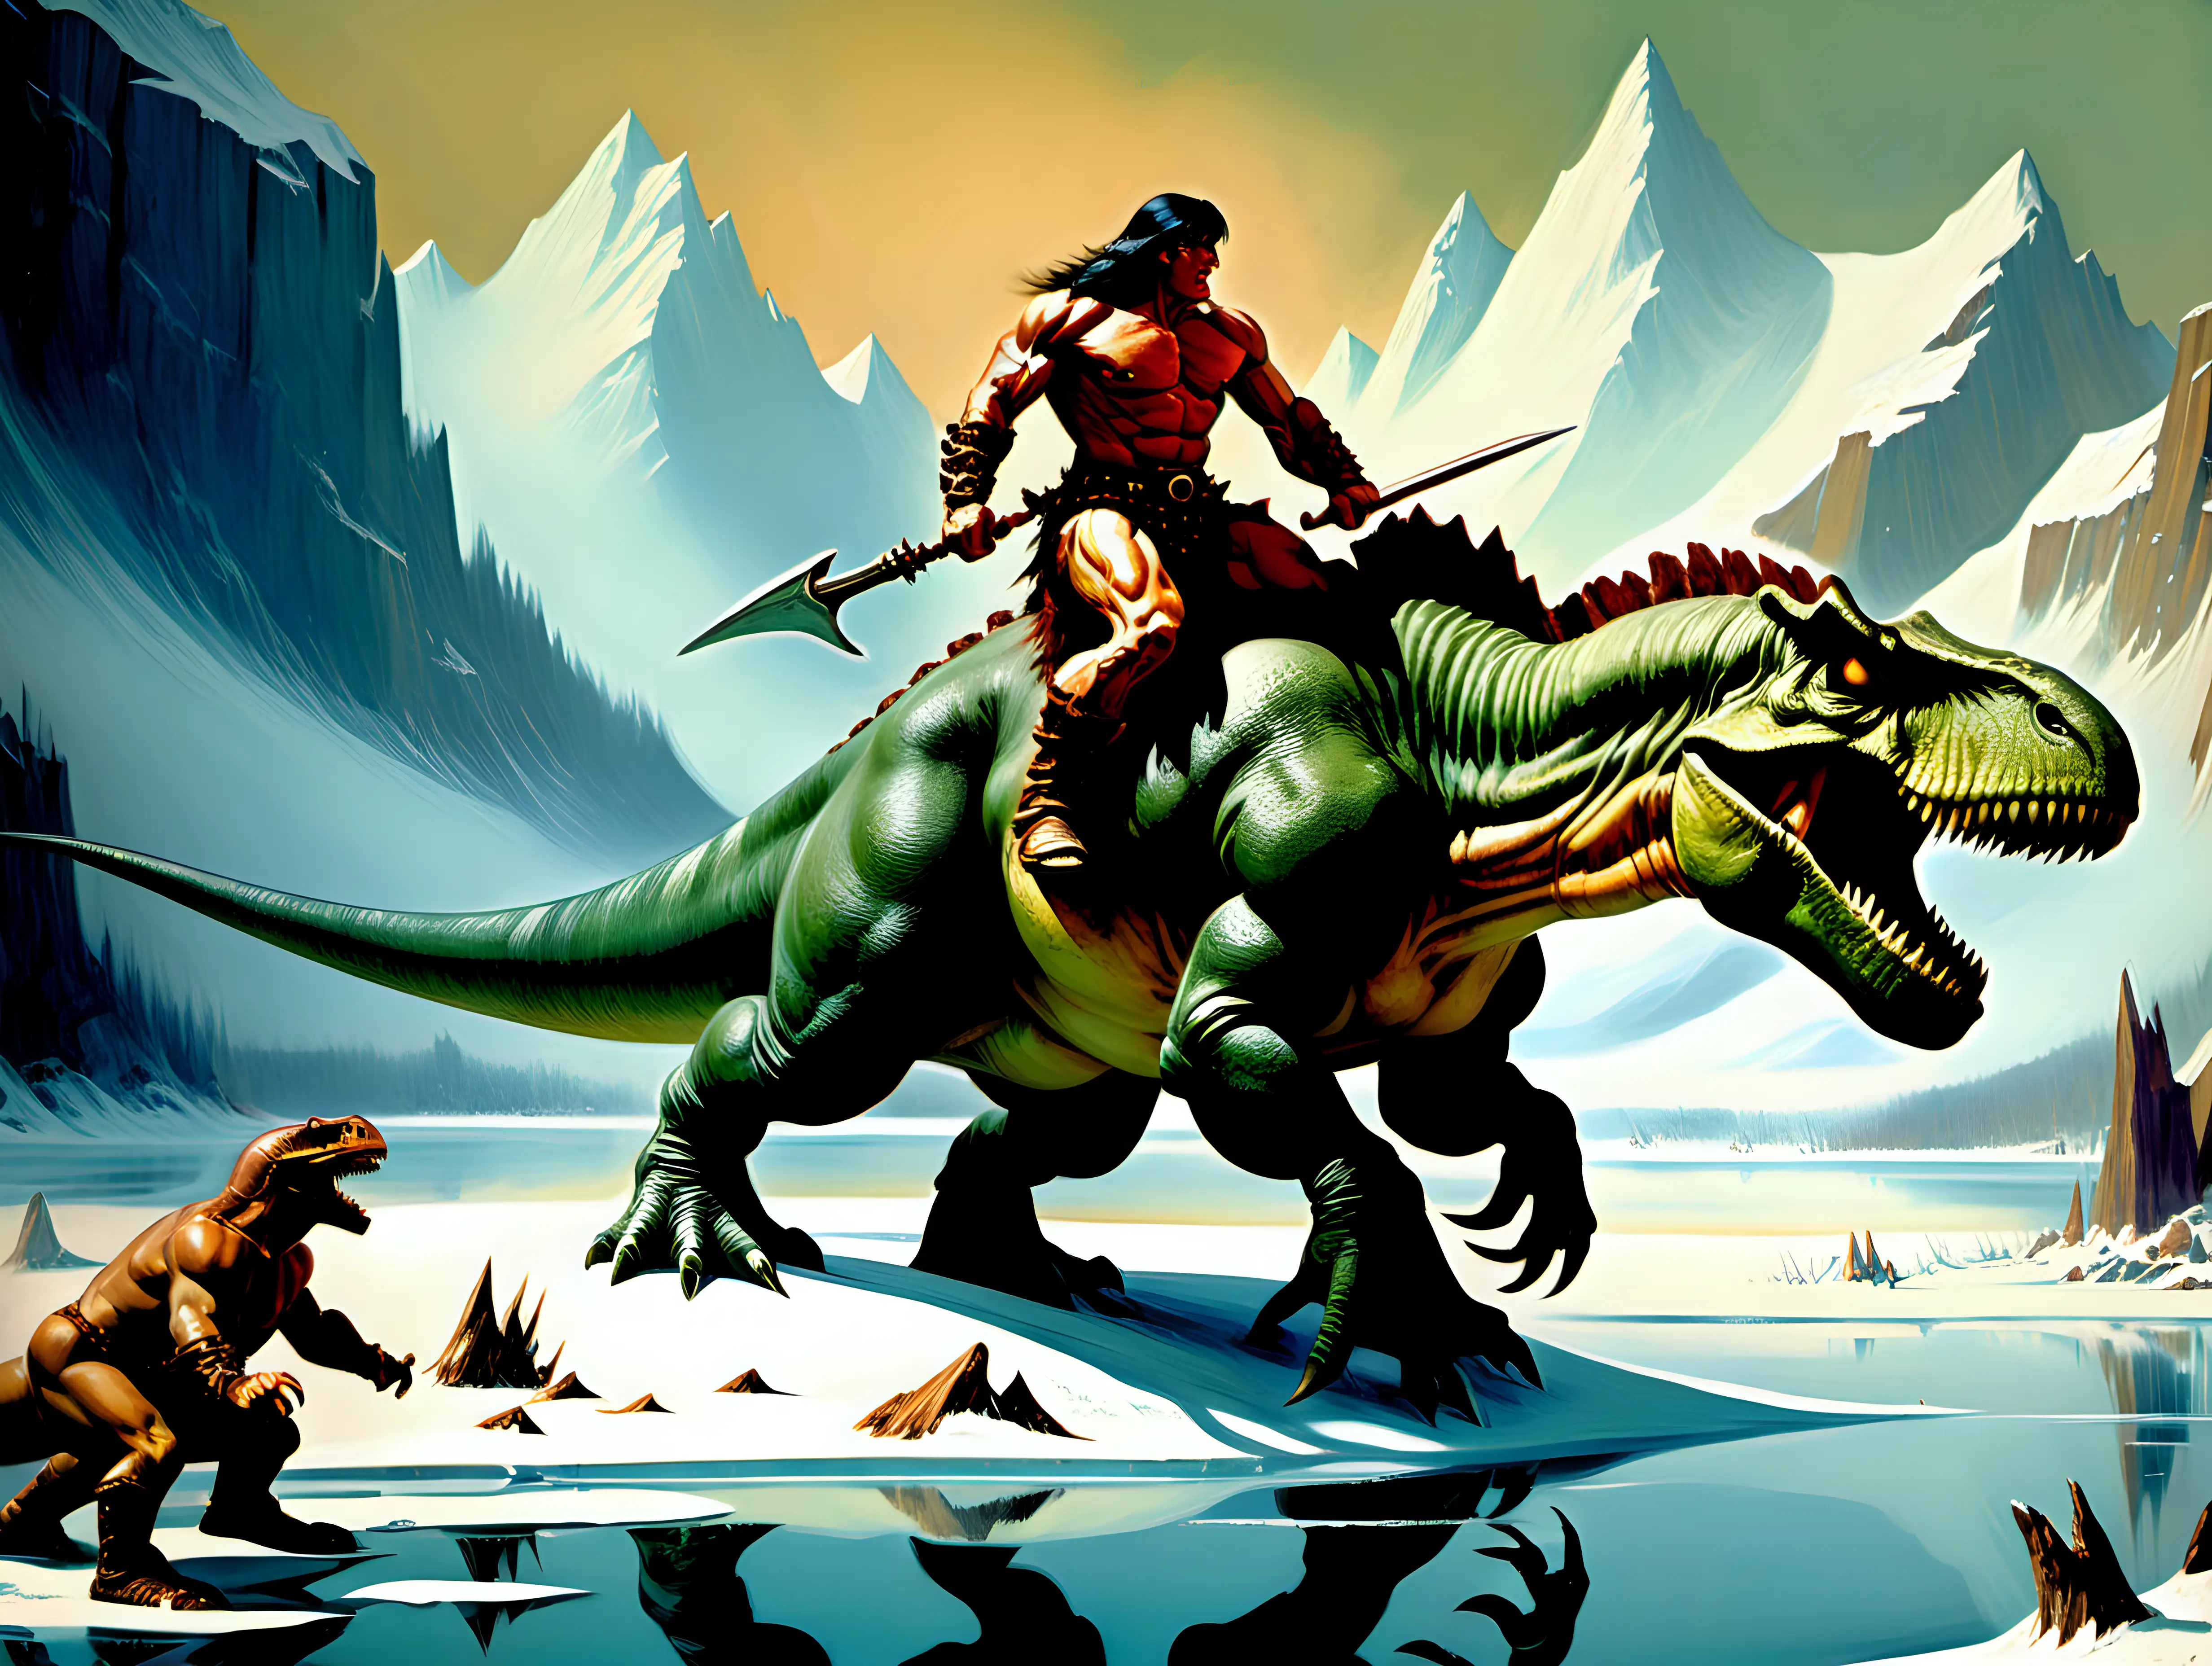 Conan the Barbarian Riding a Dinosaur in Frank Frazetta Style on a Frozen Mountain Lake